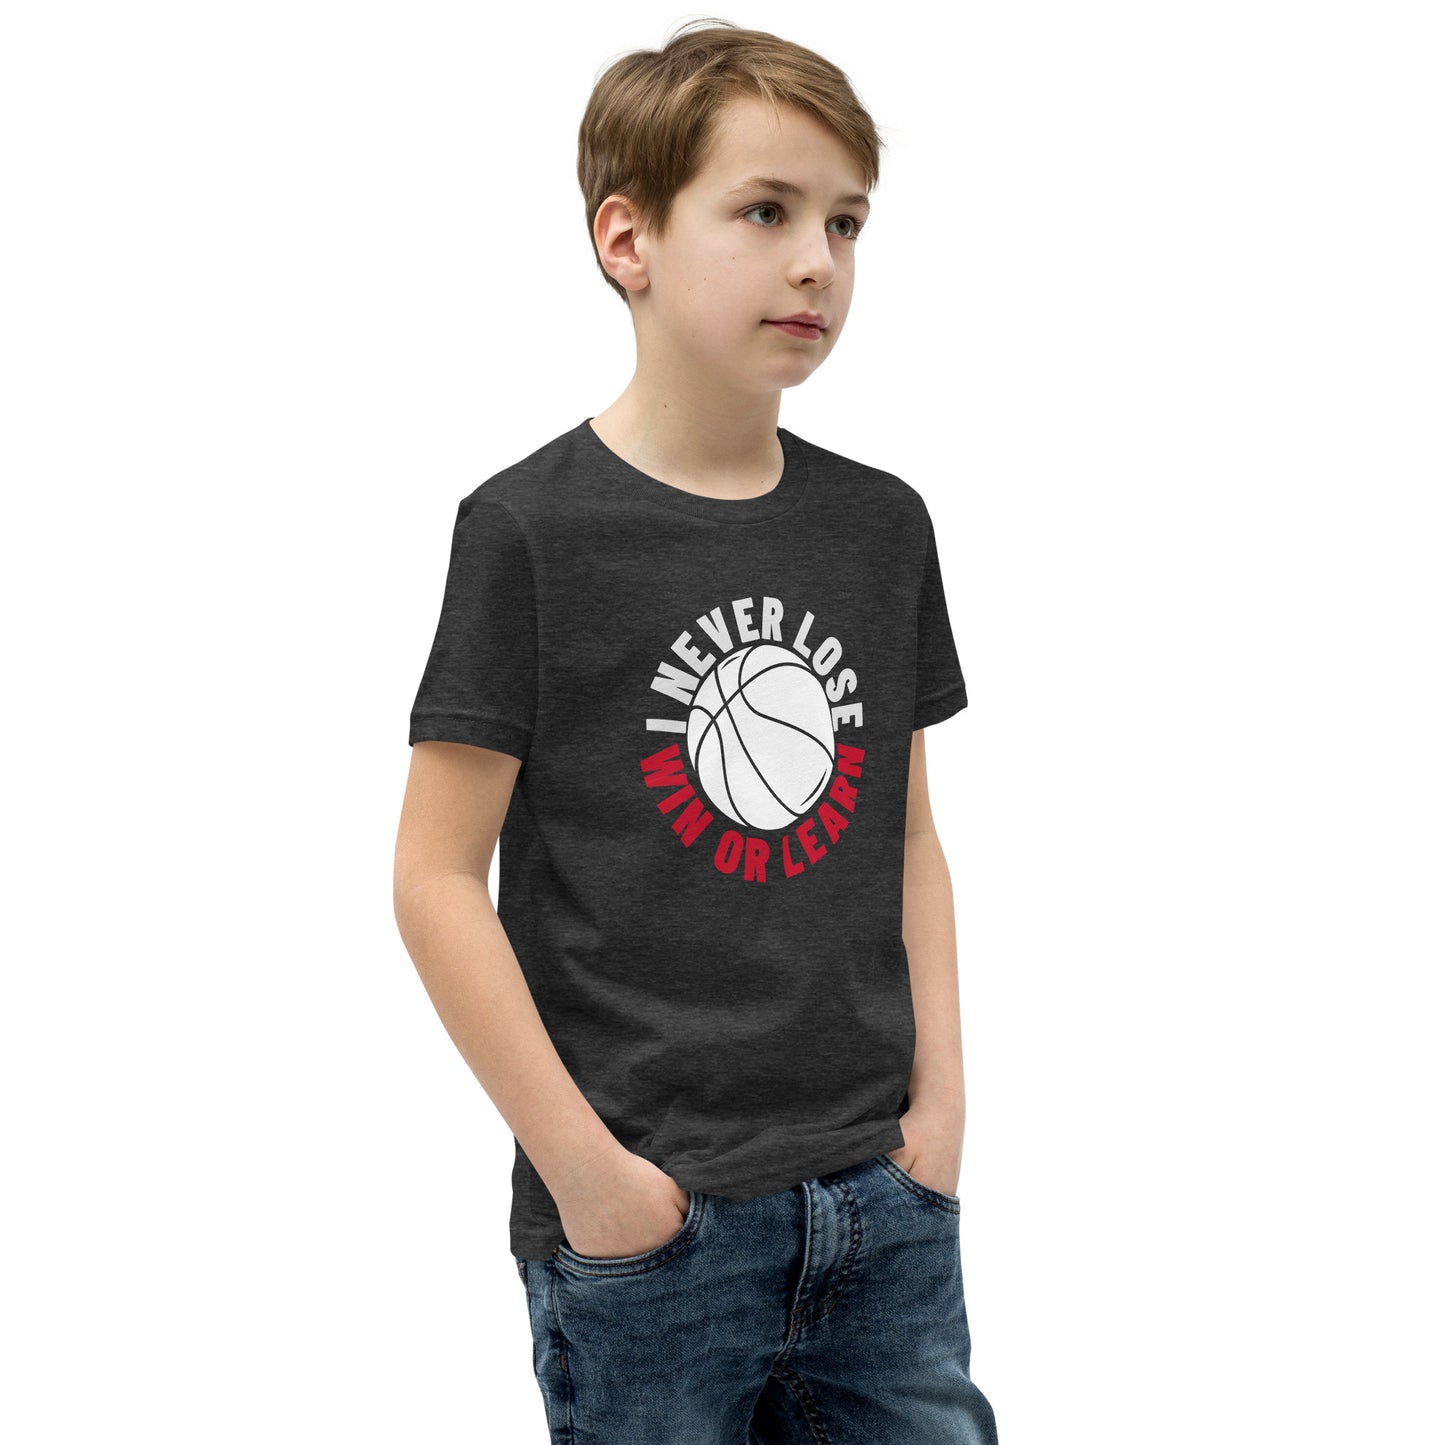 Baskeball Win or Learn Youth Short Sleeve T-Shirt